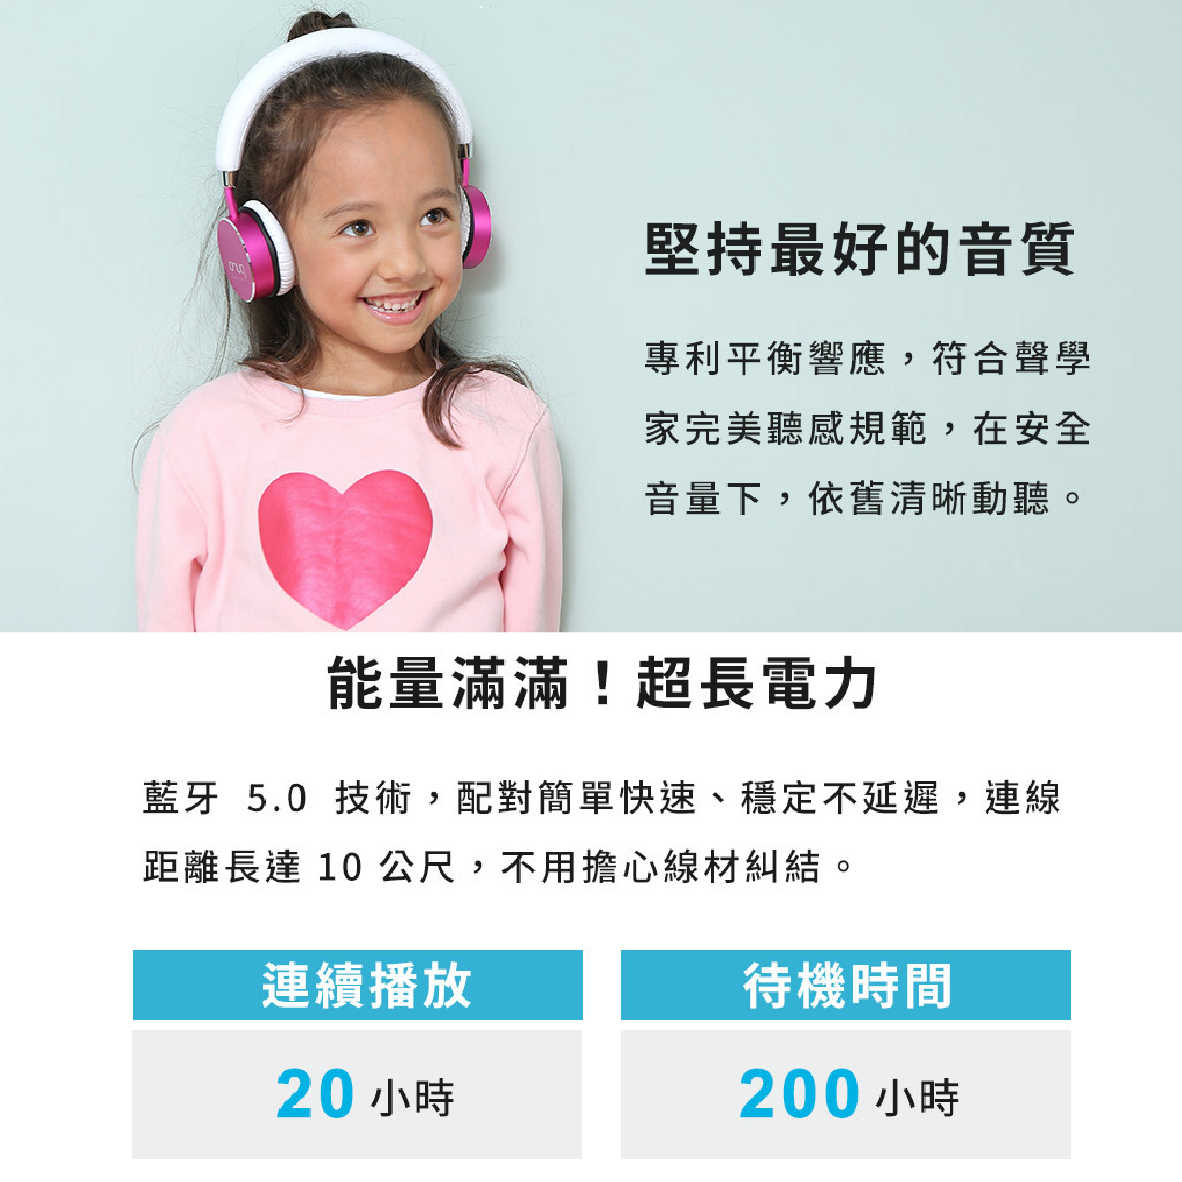 Puro BT2200s 深藍 兒童耳機 安全音量 長效續航 麥克風 耳罩式耳機 | My Ear 耳機專門店